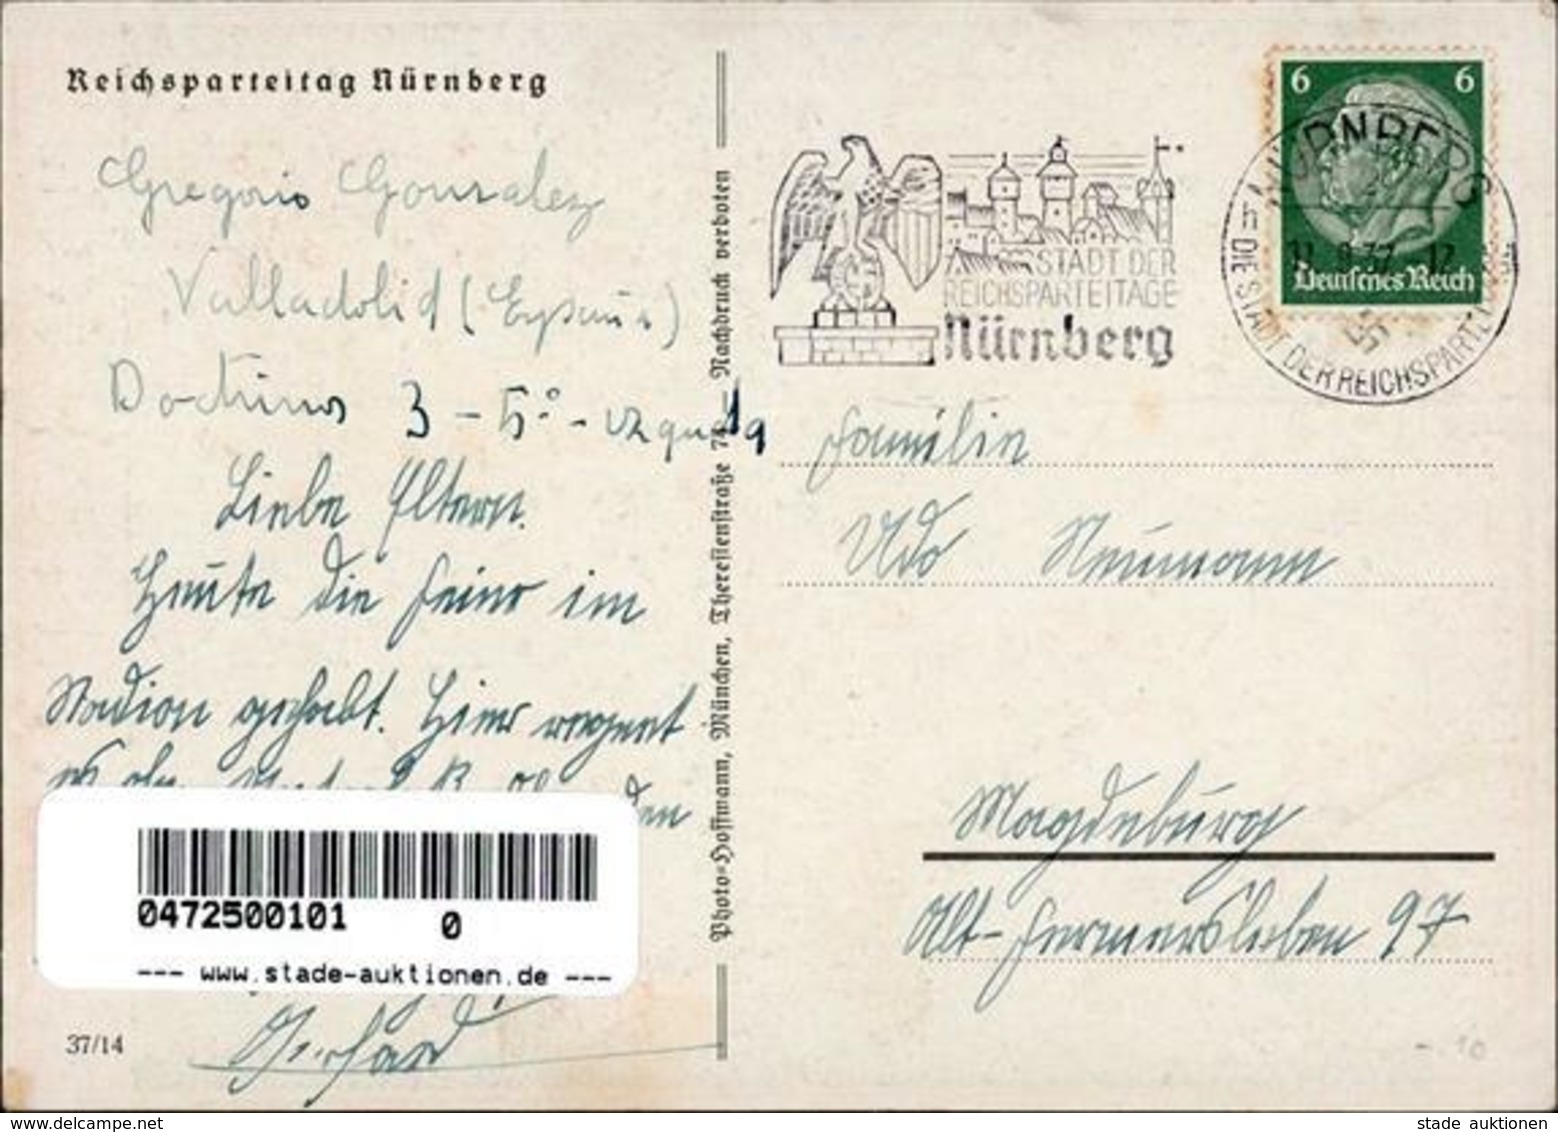 Reichsparteitag Nürnberg (8500) WK II 1937  I-II - War 1939-45